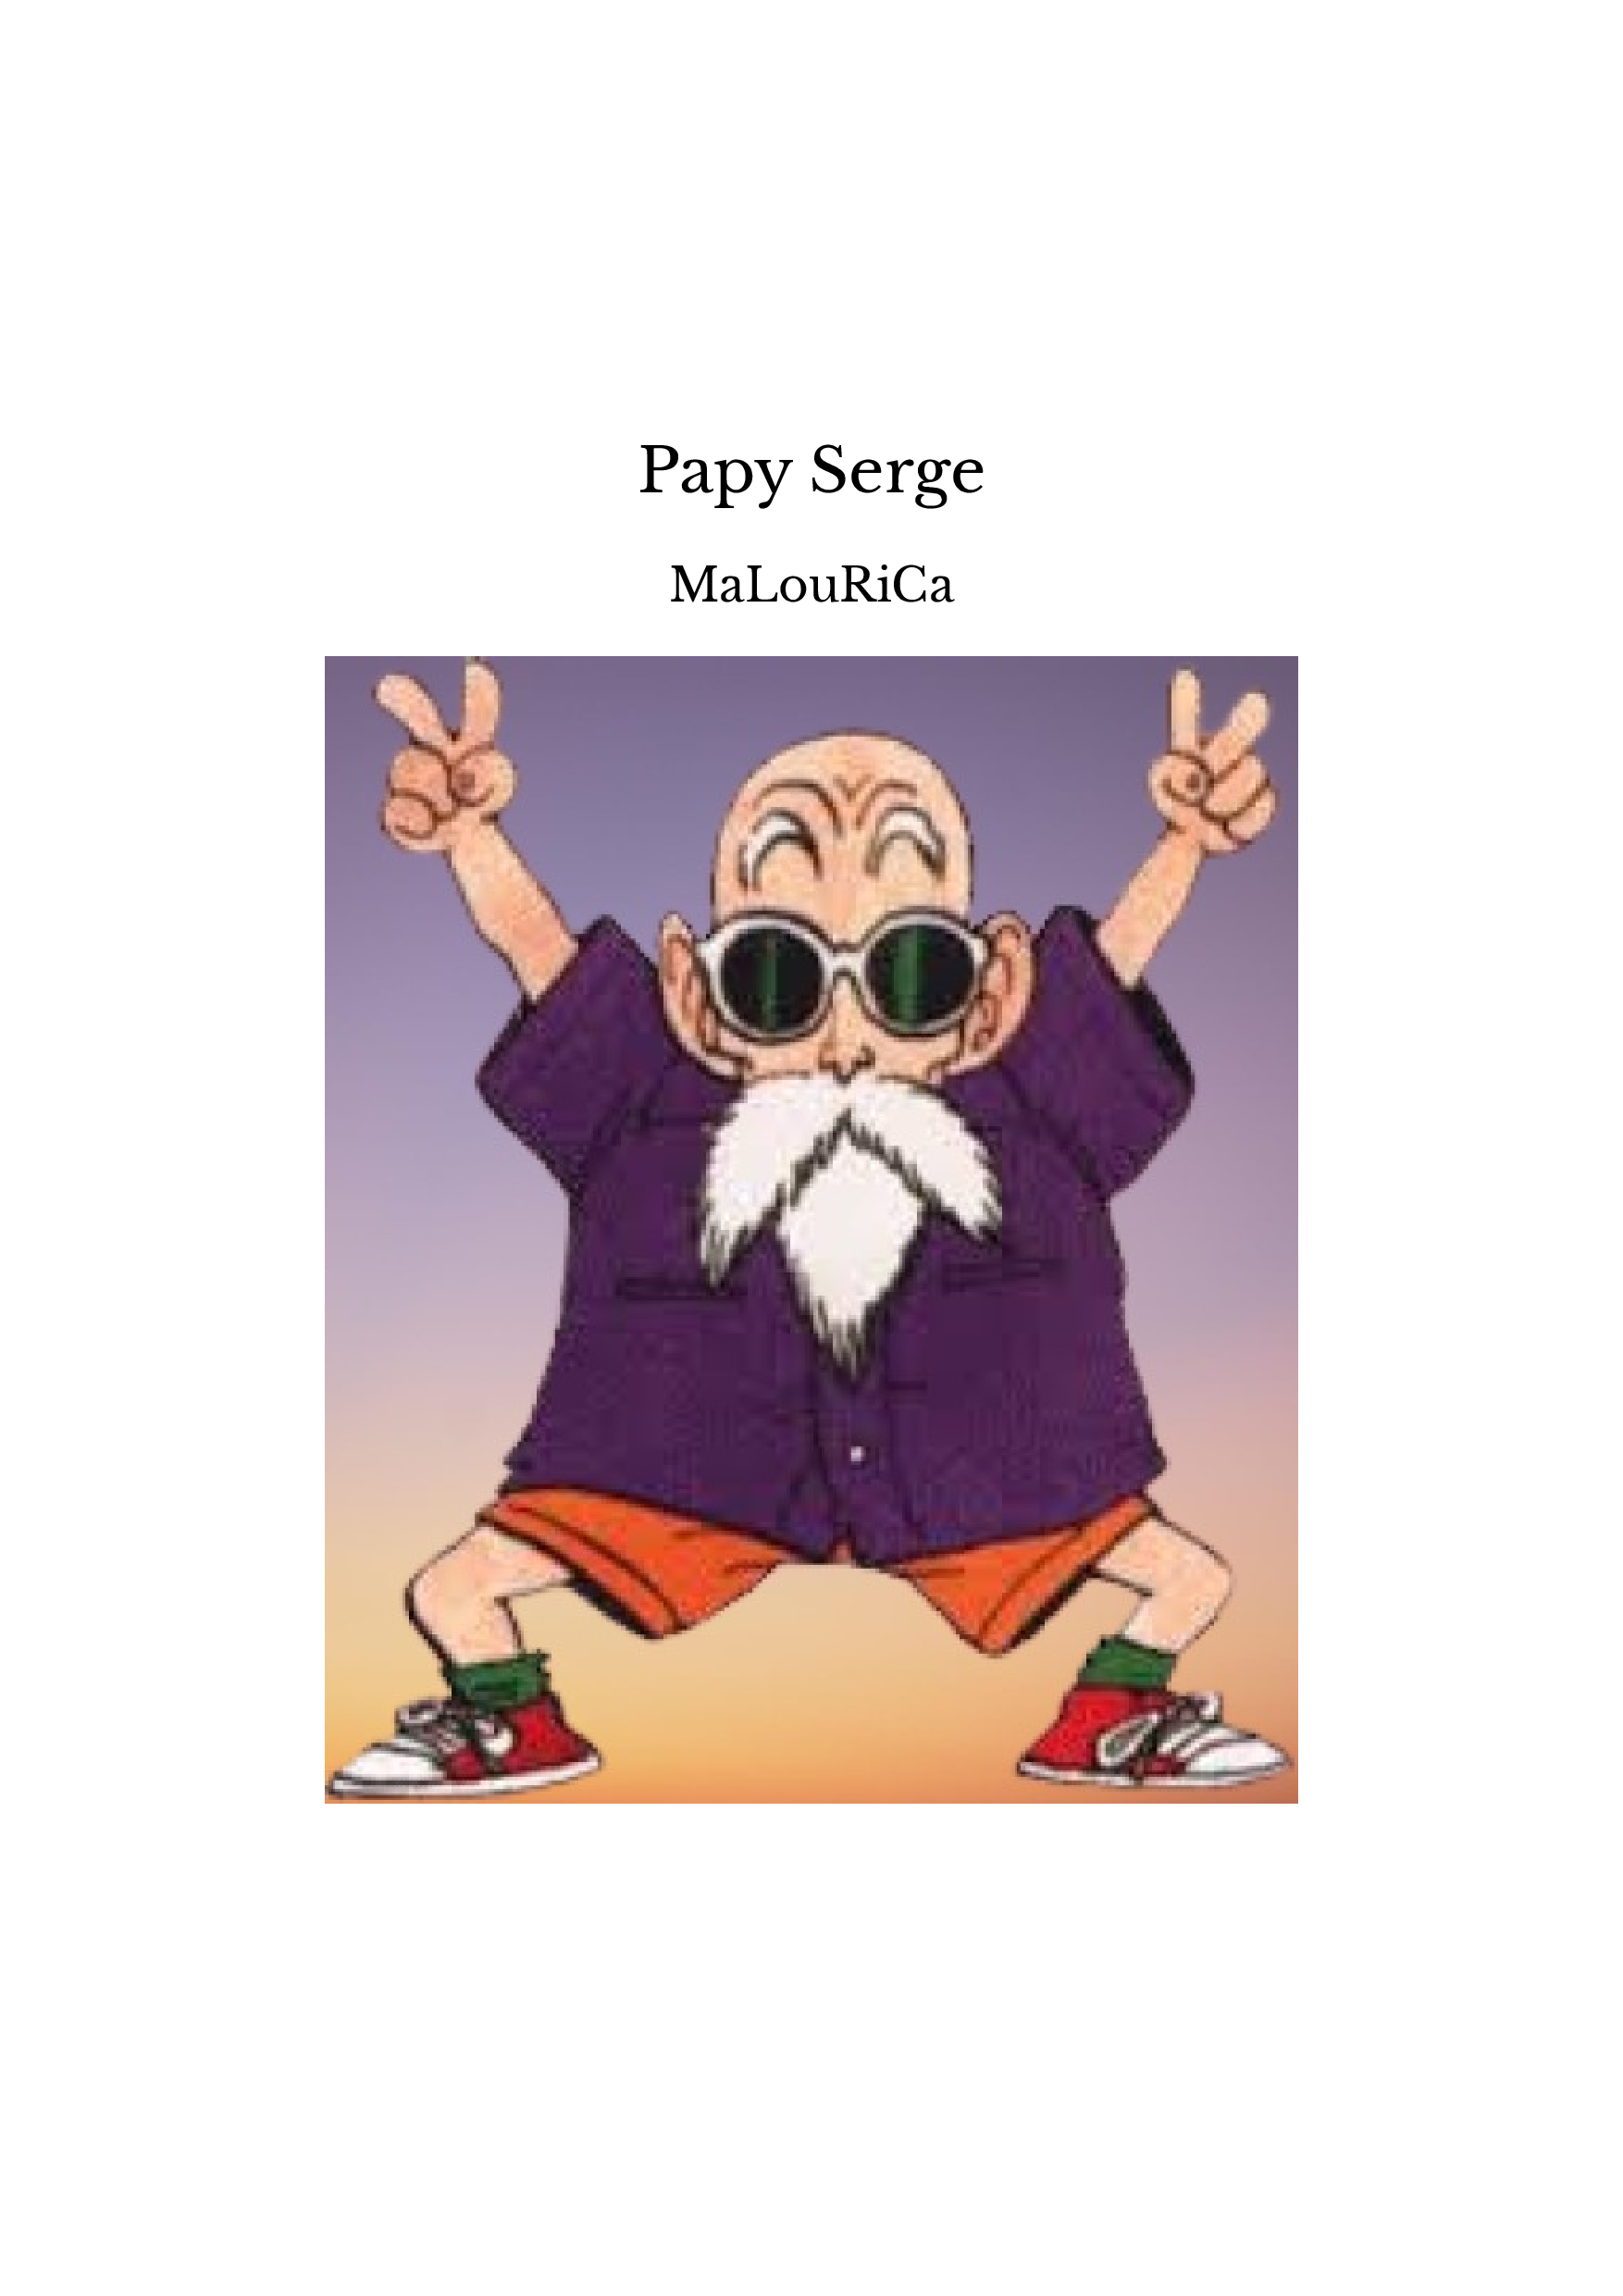 Papy Serge